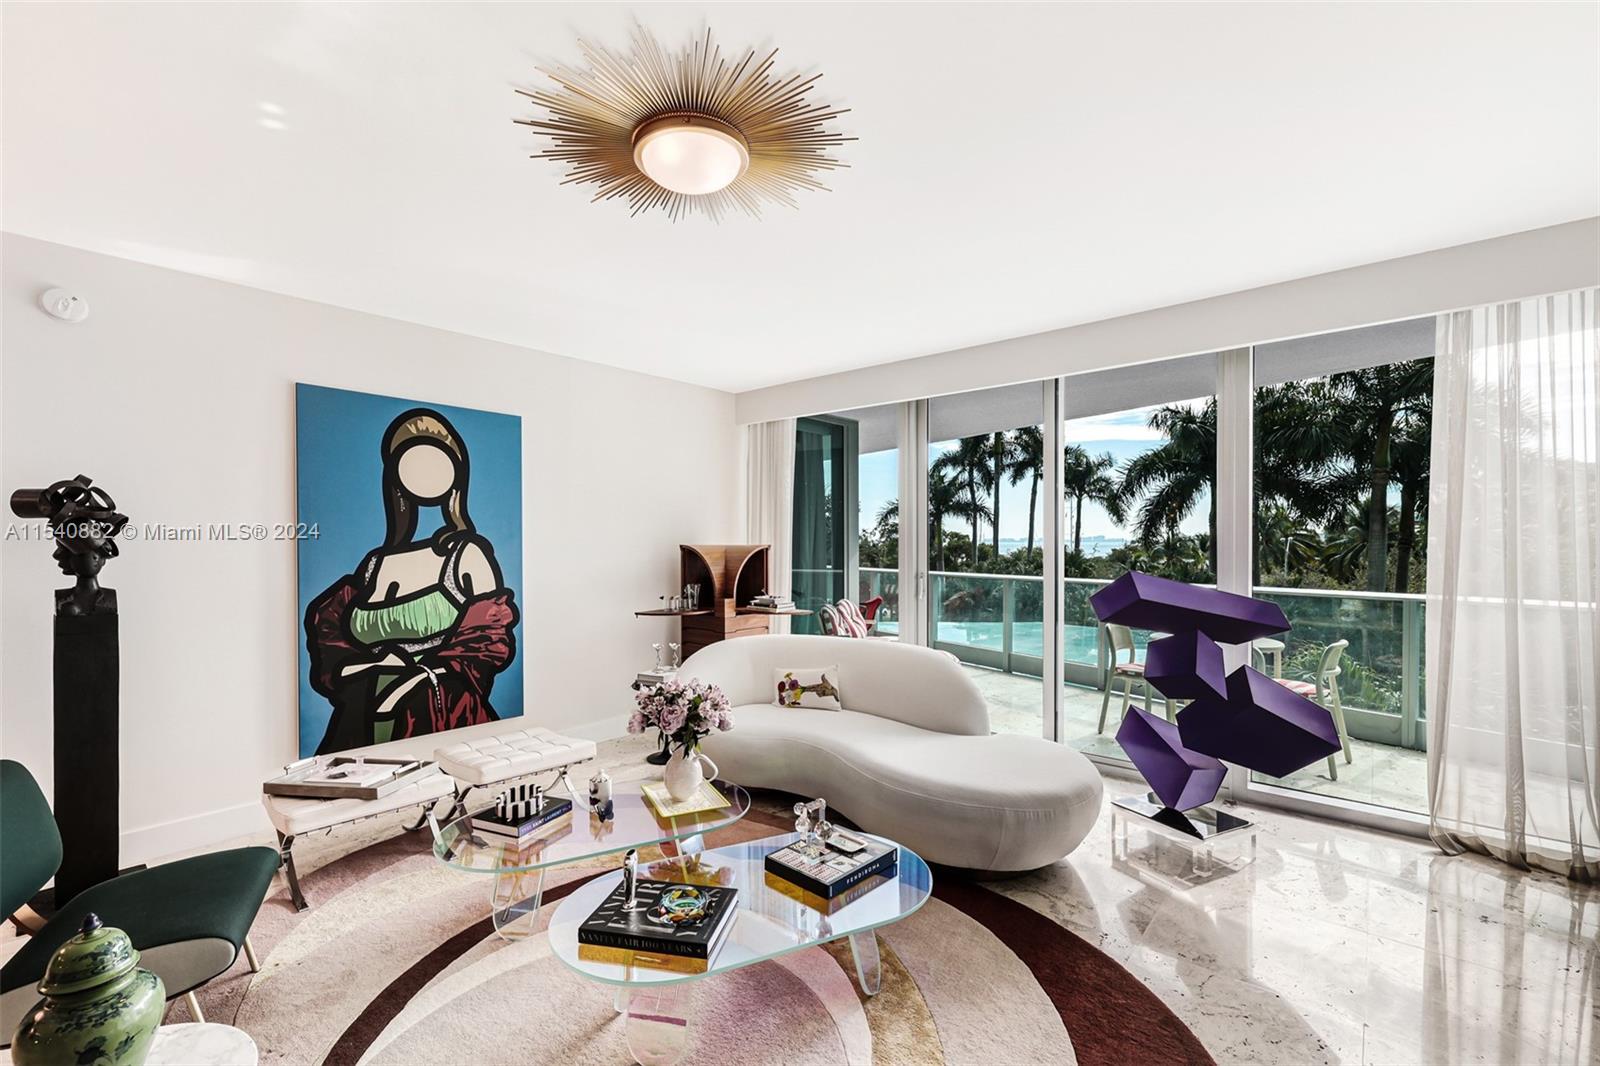 Property for Sale at 2627 S Bayshore Dr 504, Miami, Broward County, Florida - Bedrooms: 3 
Bathrooms: 4  - $4,100,000